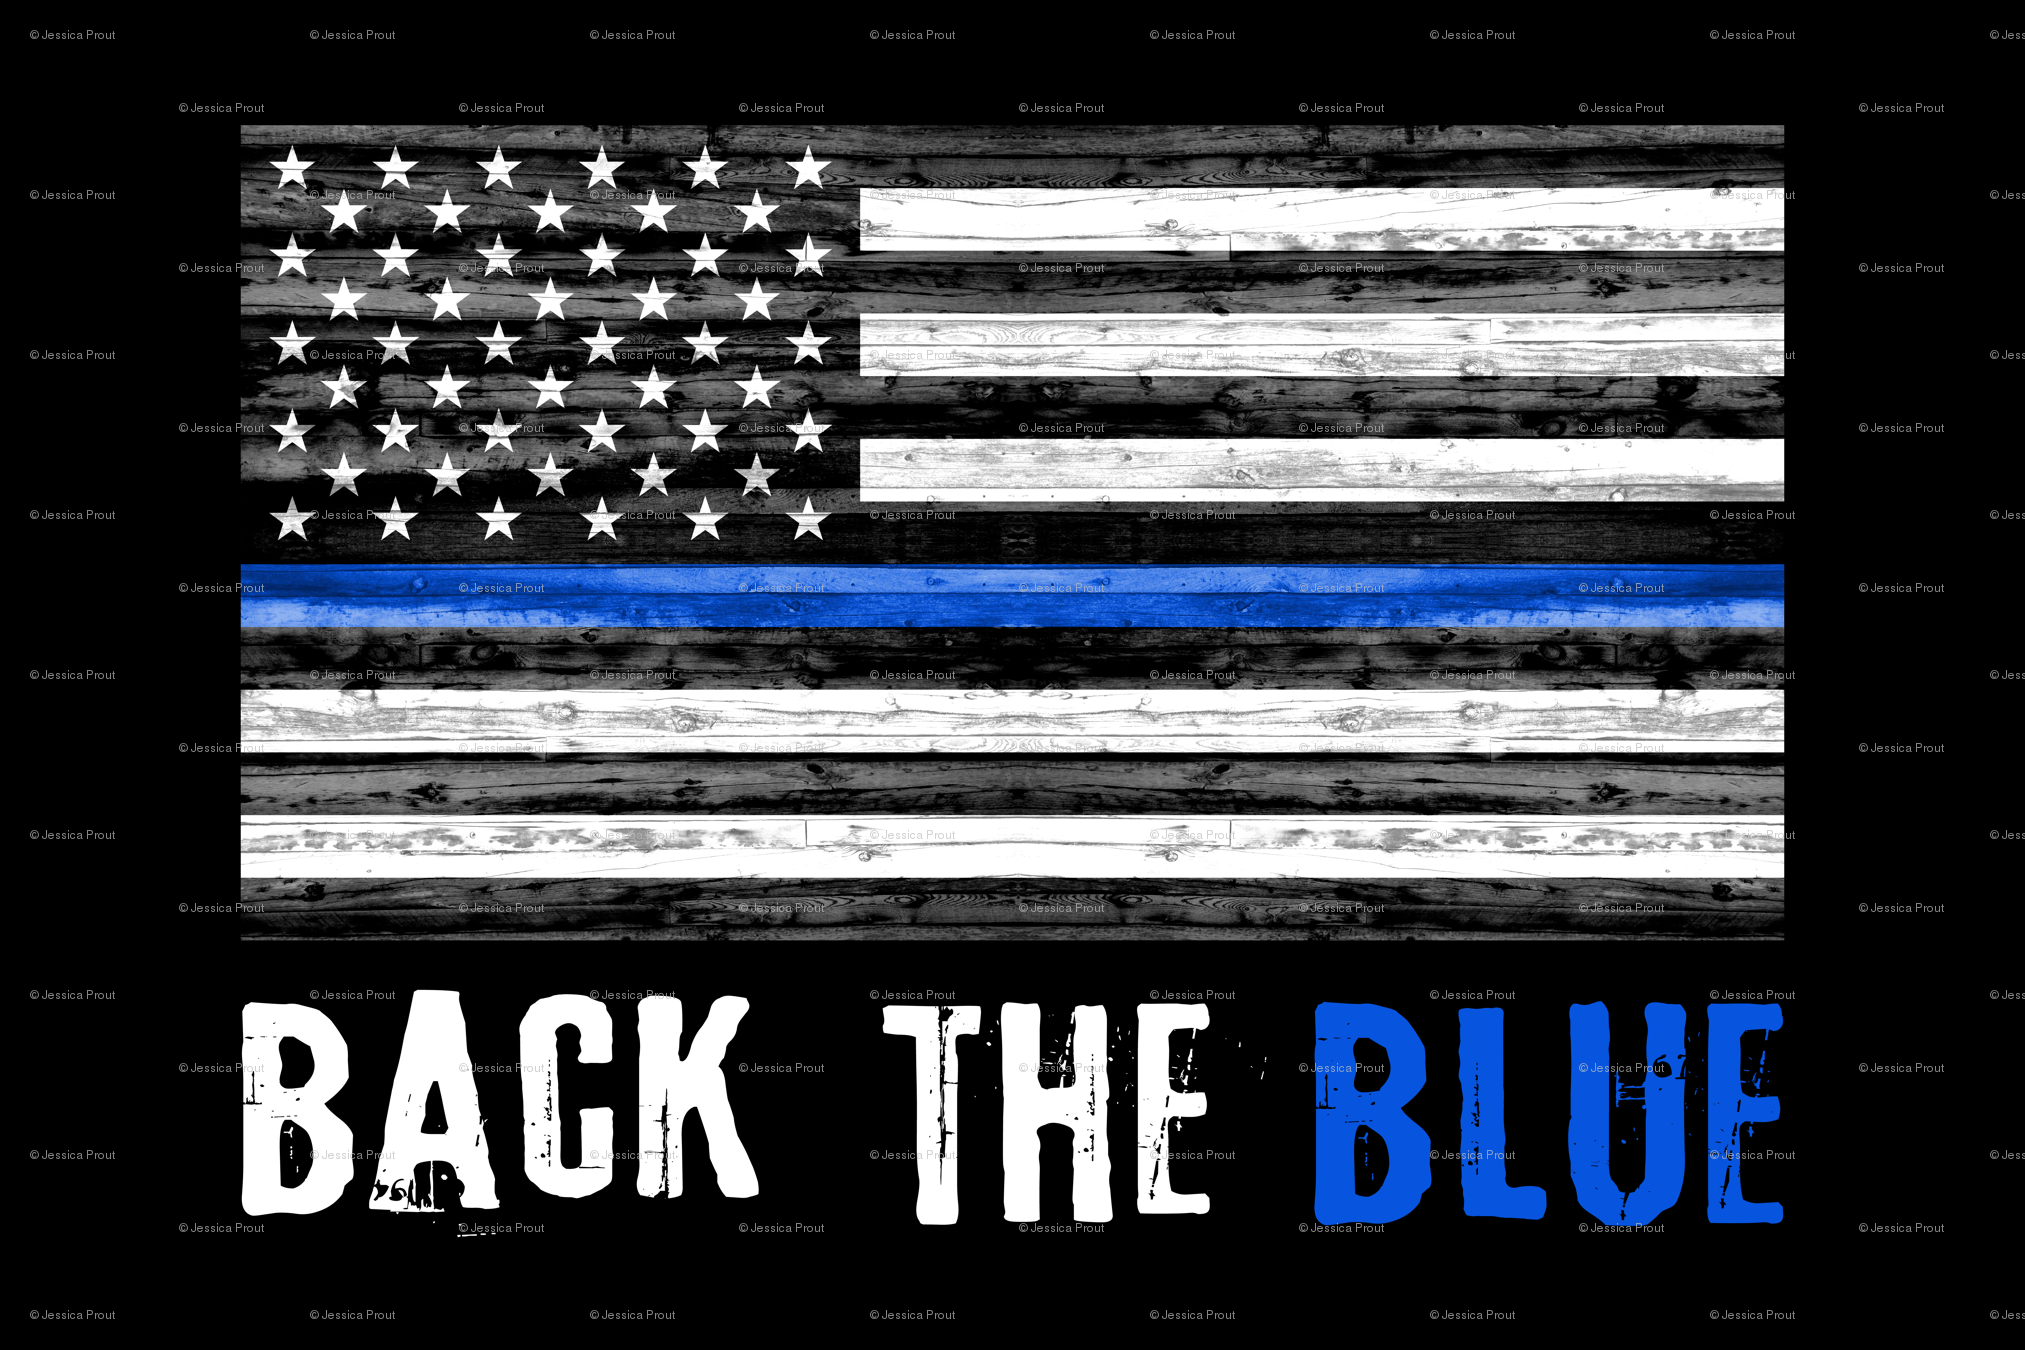 Texas Police Appreciation Thin Blue Line I Back The Blue 2 Digital Art by  JeanBaptiste Perie  Pixels